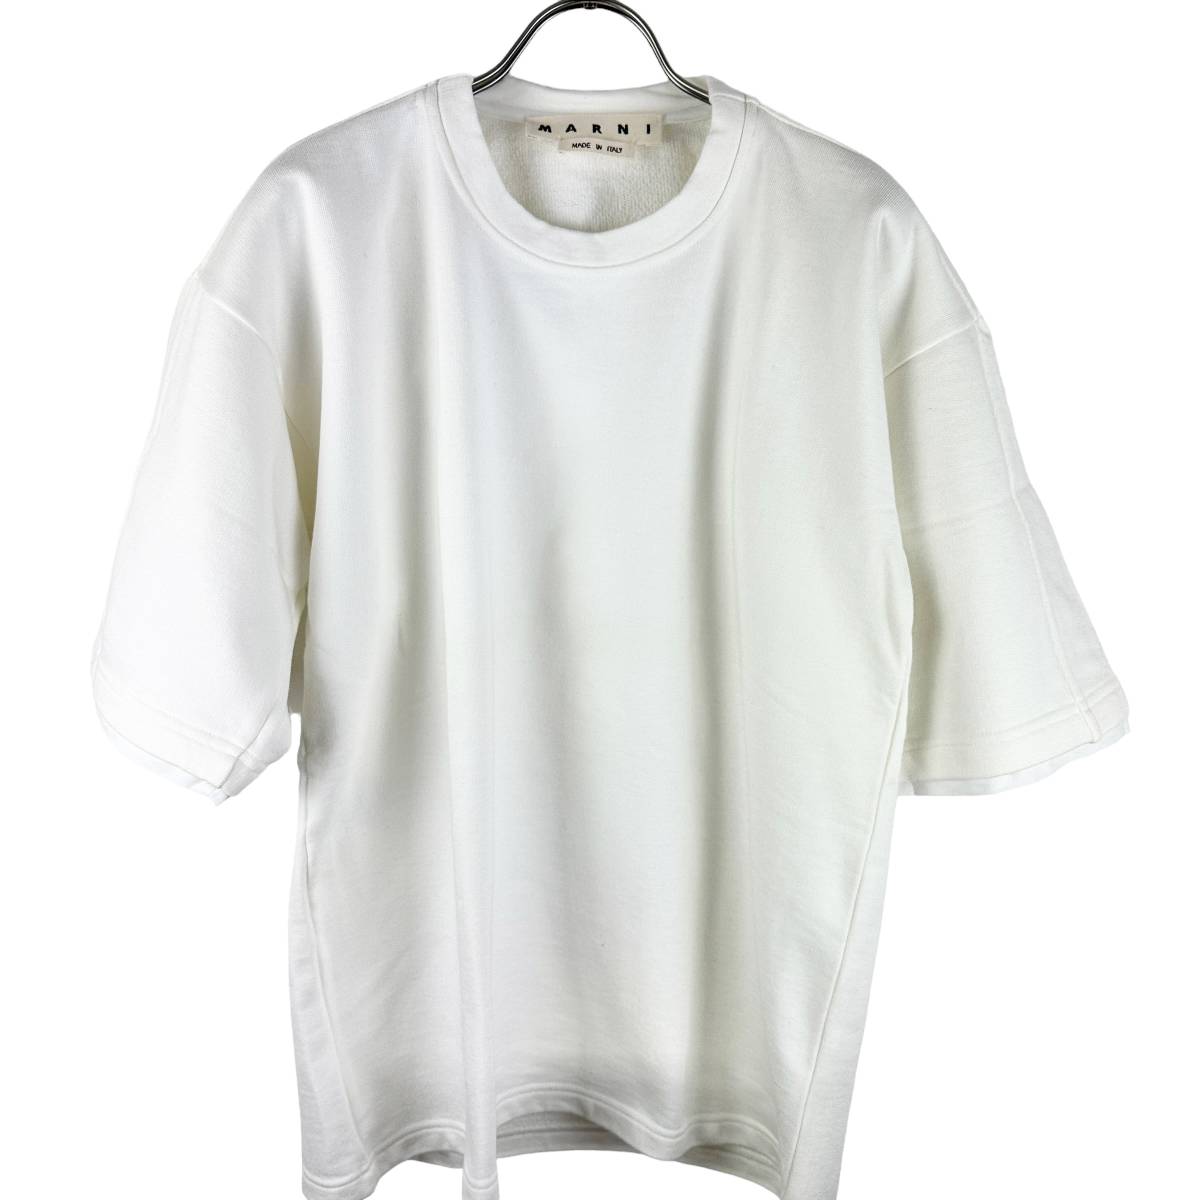 MARNI(マルニ) Thick Material T Shirt (white)